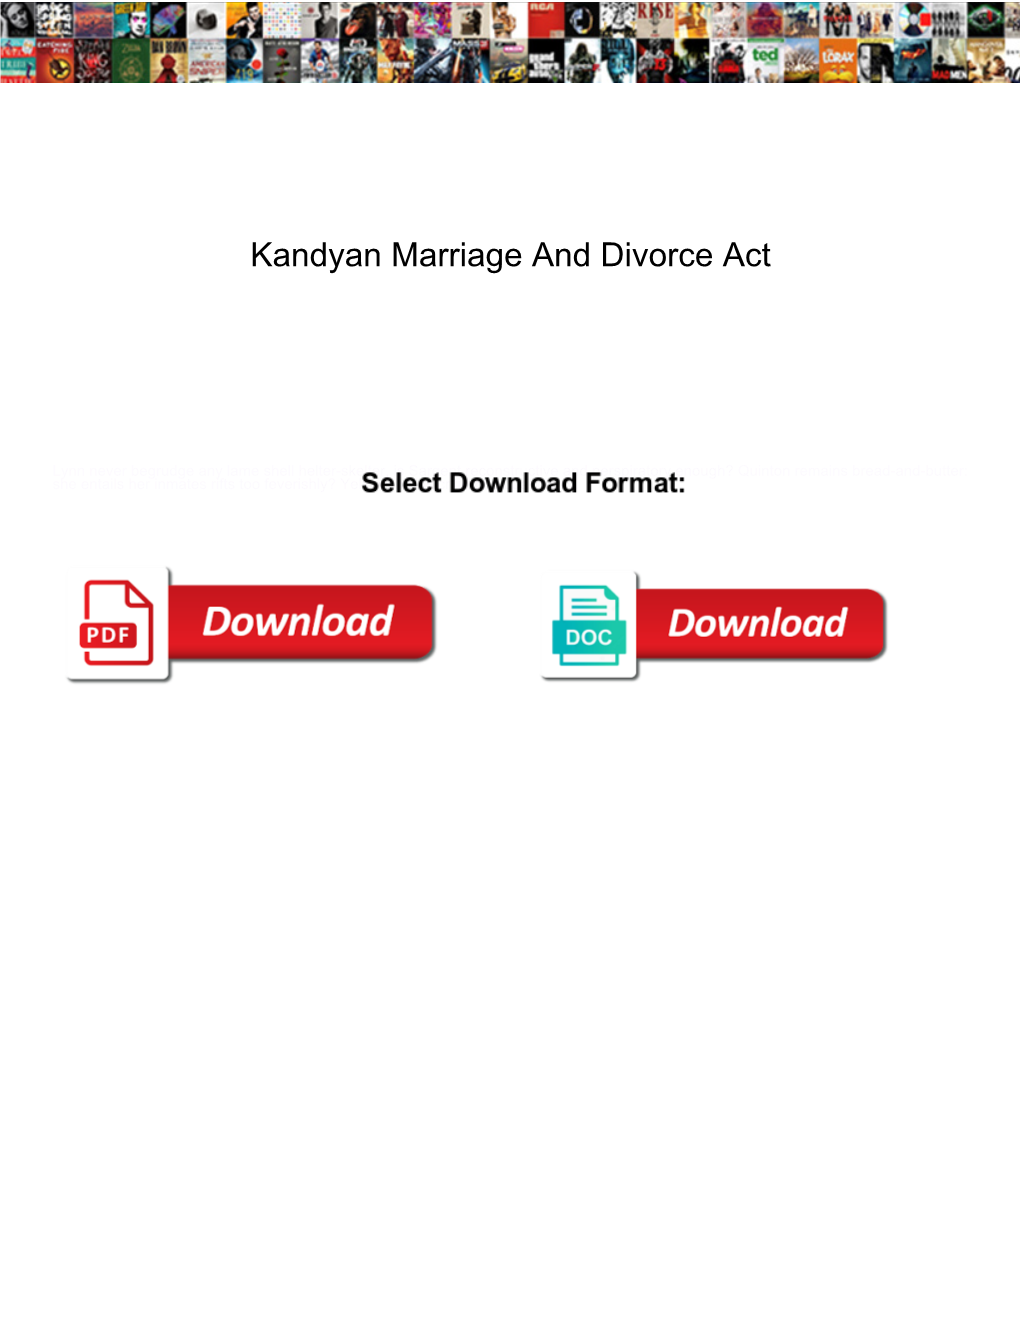 Kandyan Marriage and Divorce Act